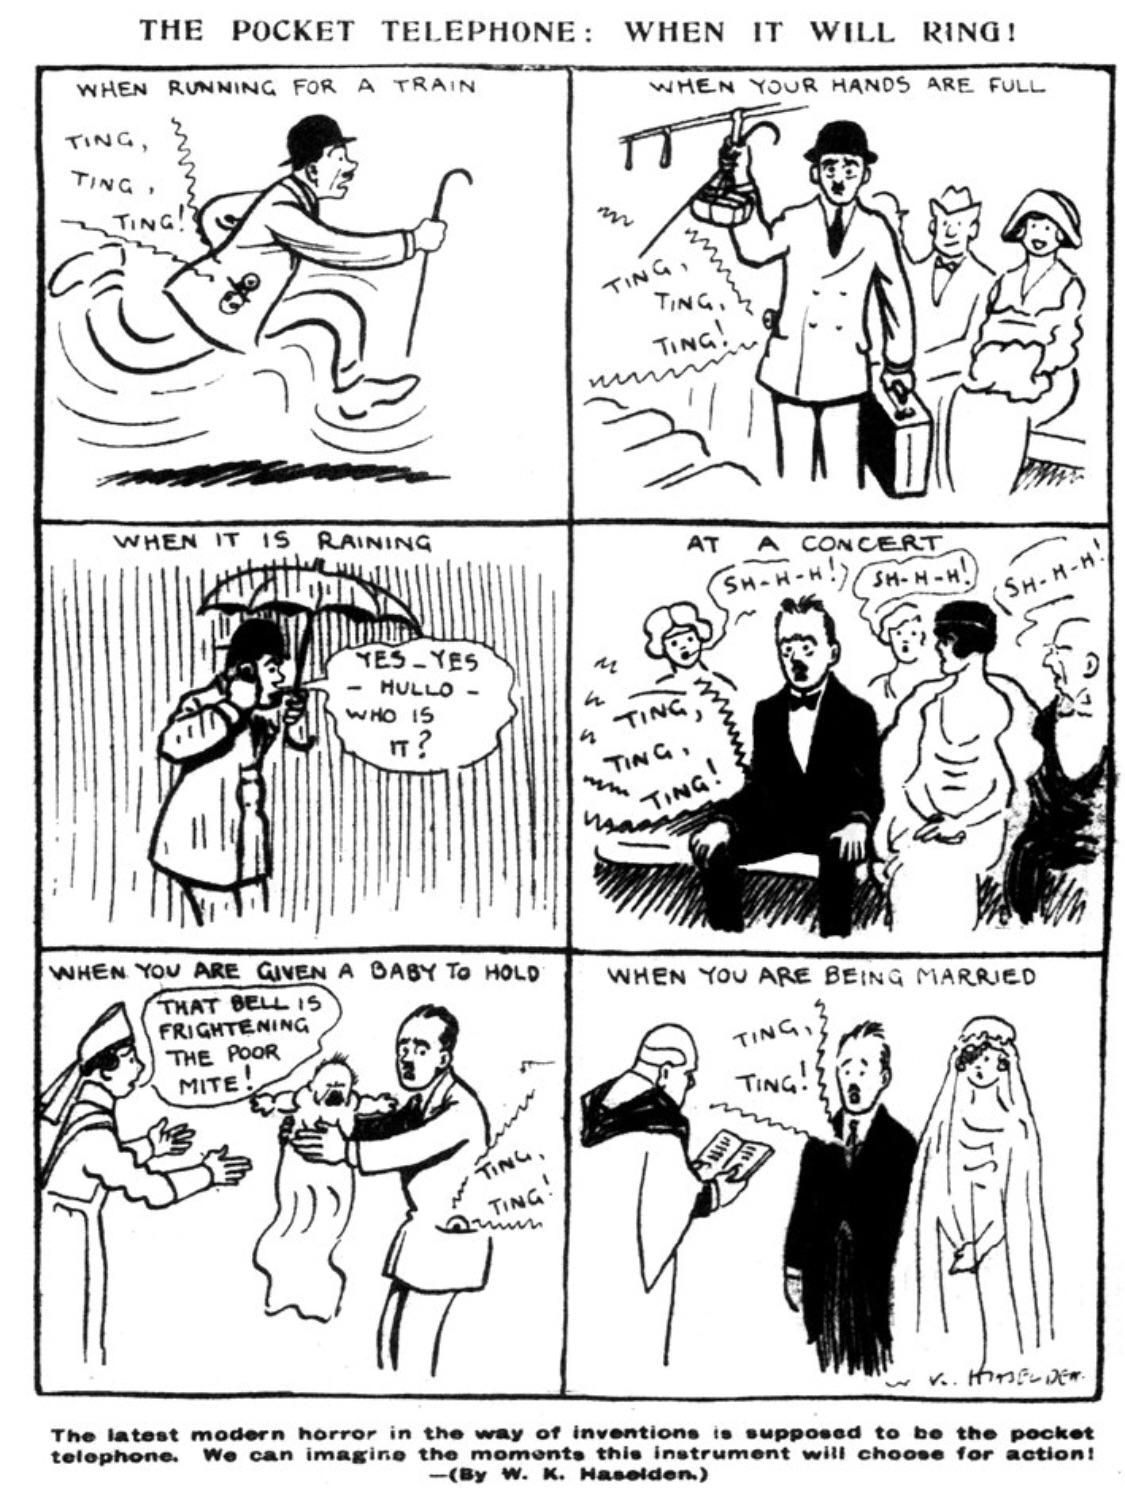 1920s comic strip predicting the mobile phone.